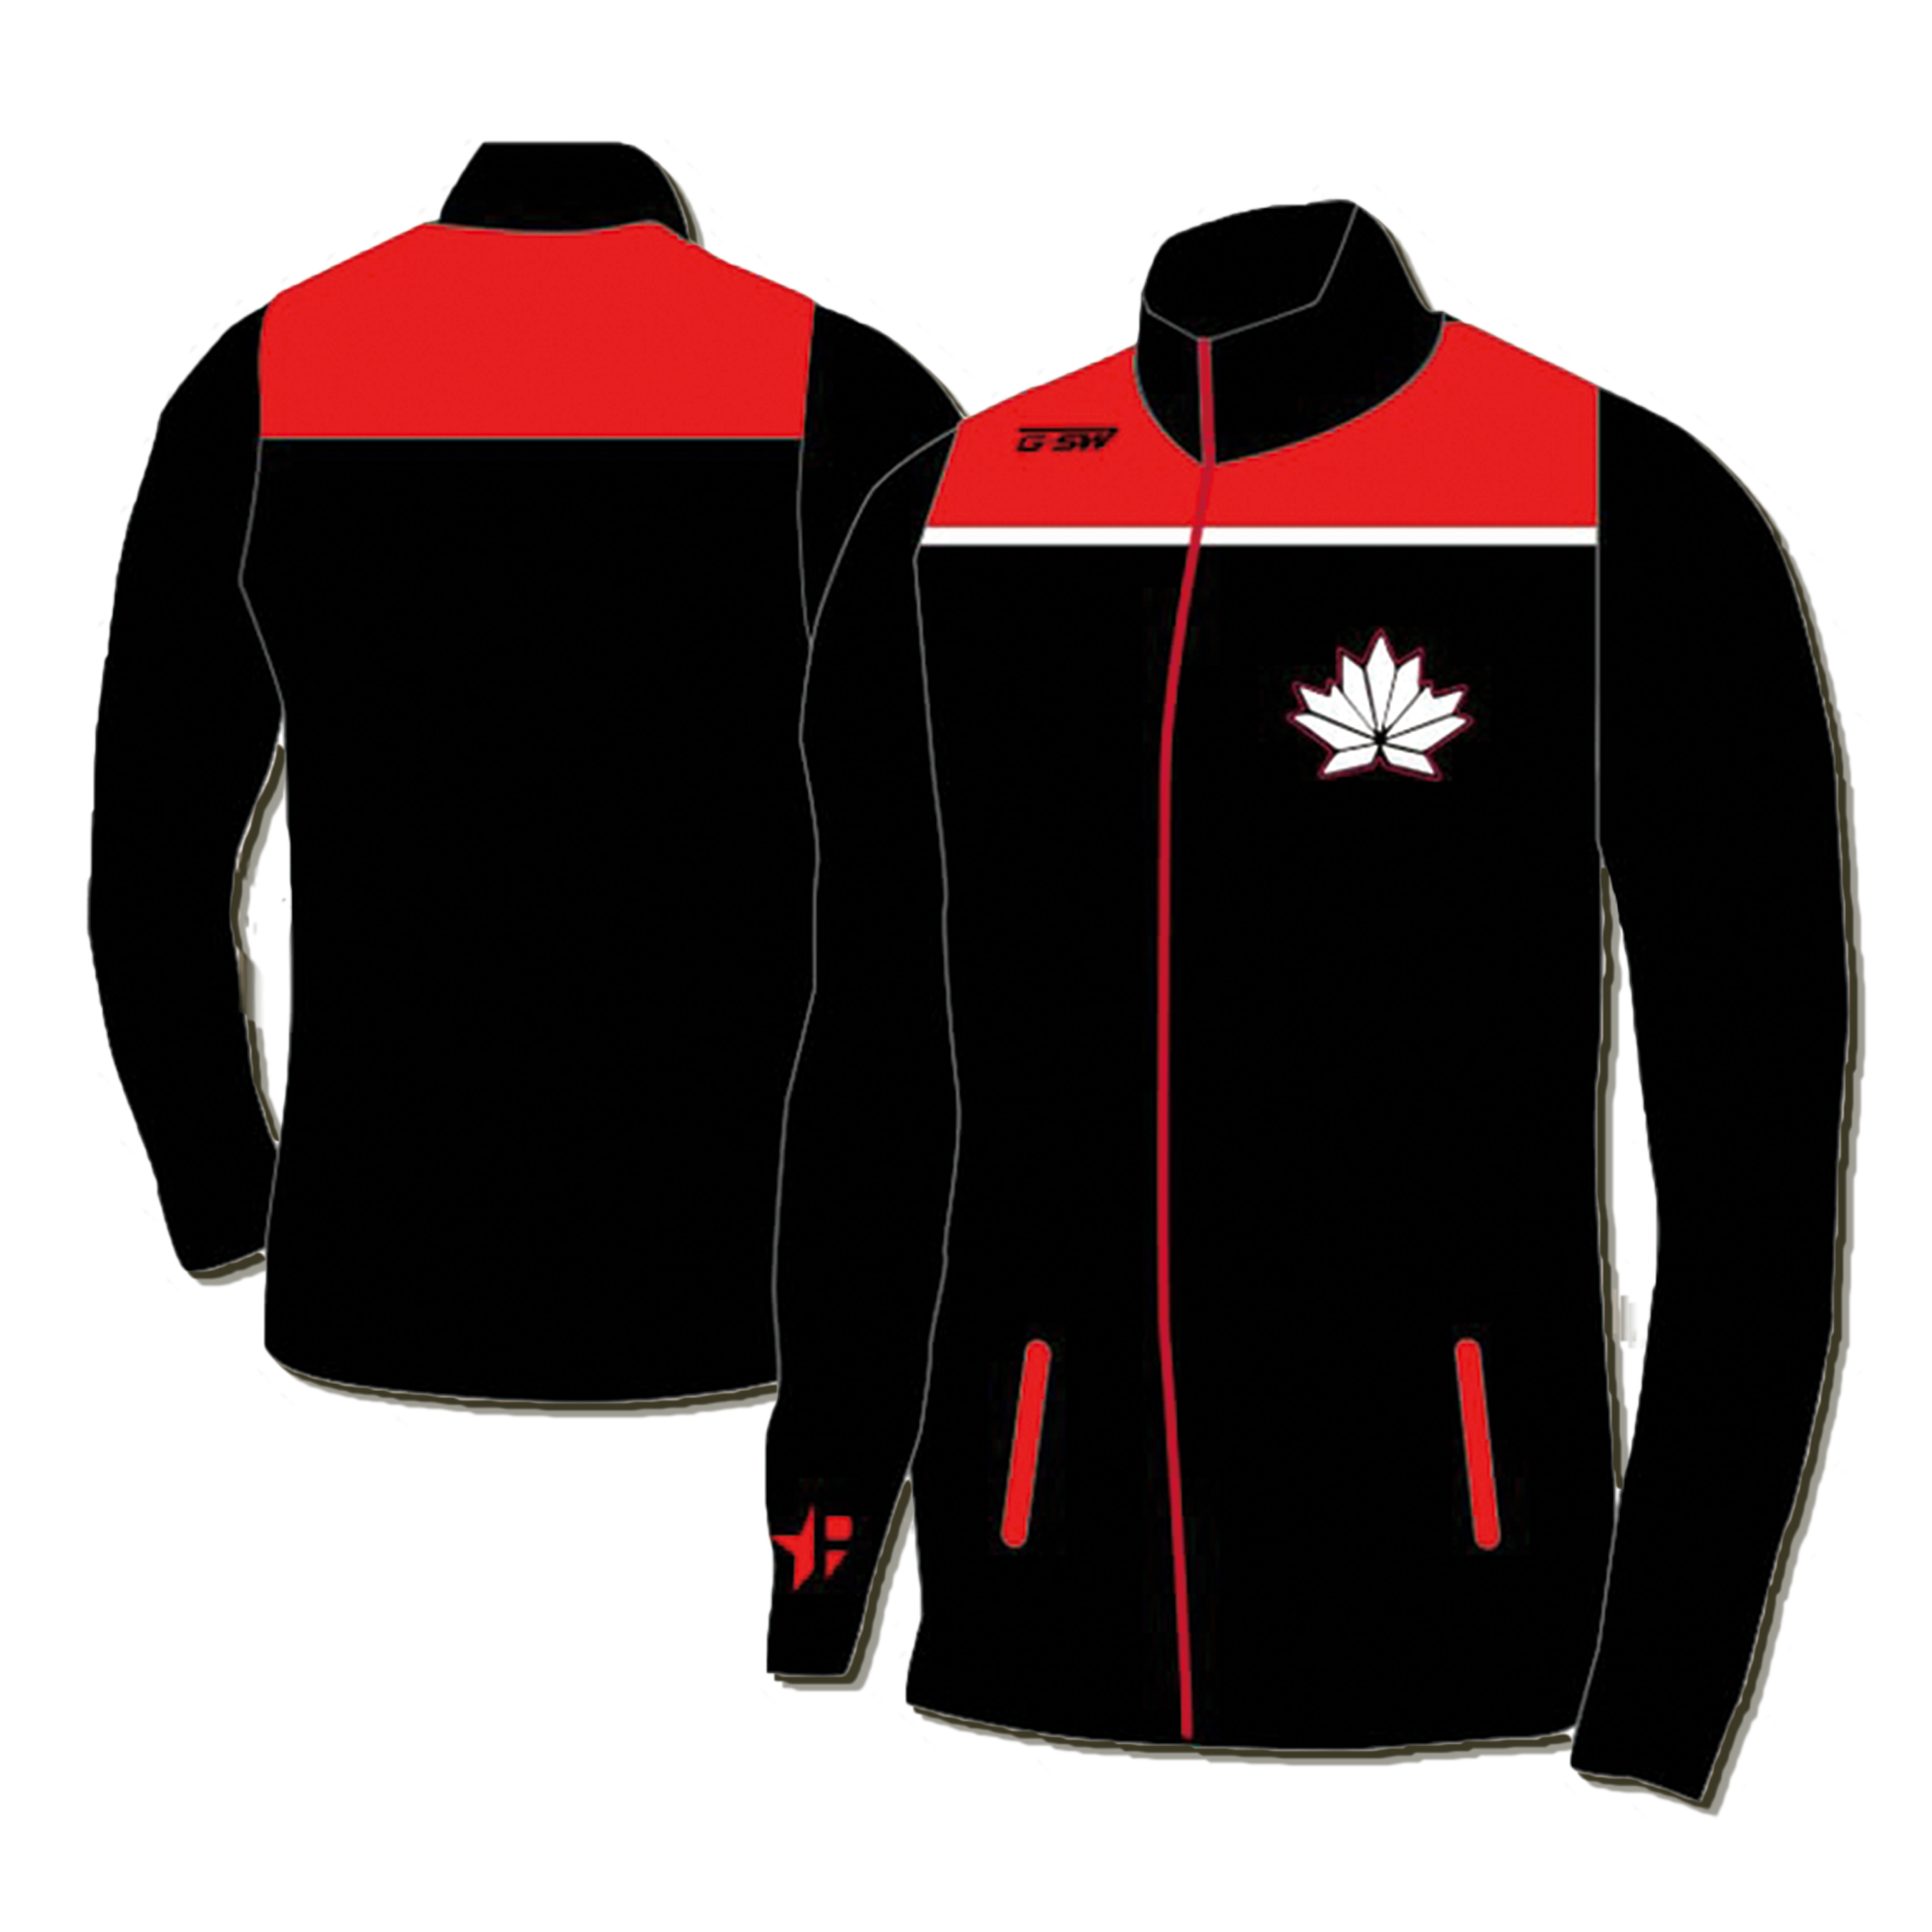 Canada West World Cup Team Bundle